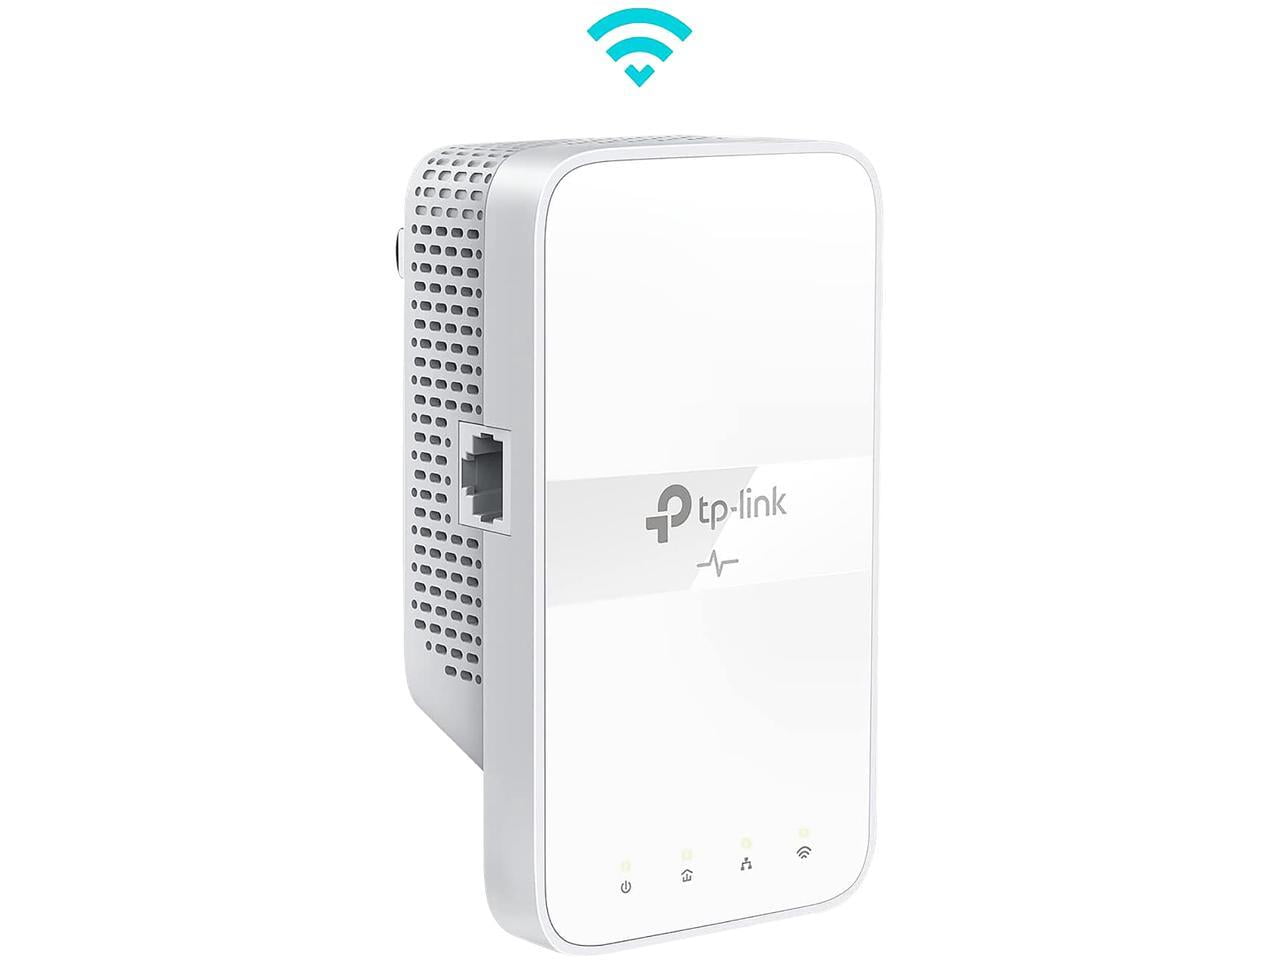 TP-Link CPL WiFi AC1200 Mbps + CPL 1000 Mbps avec Port Ethernet